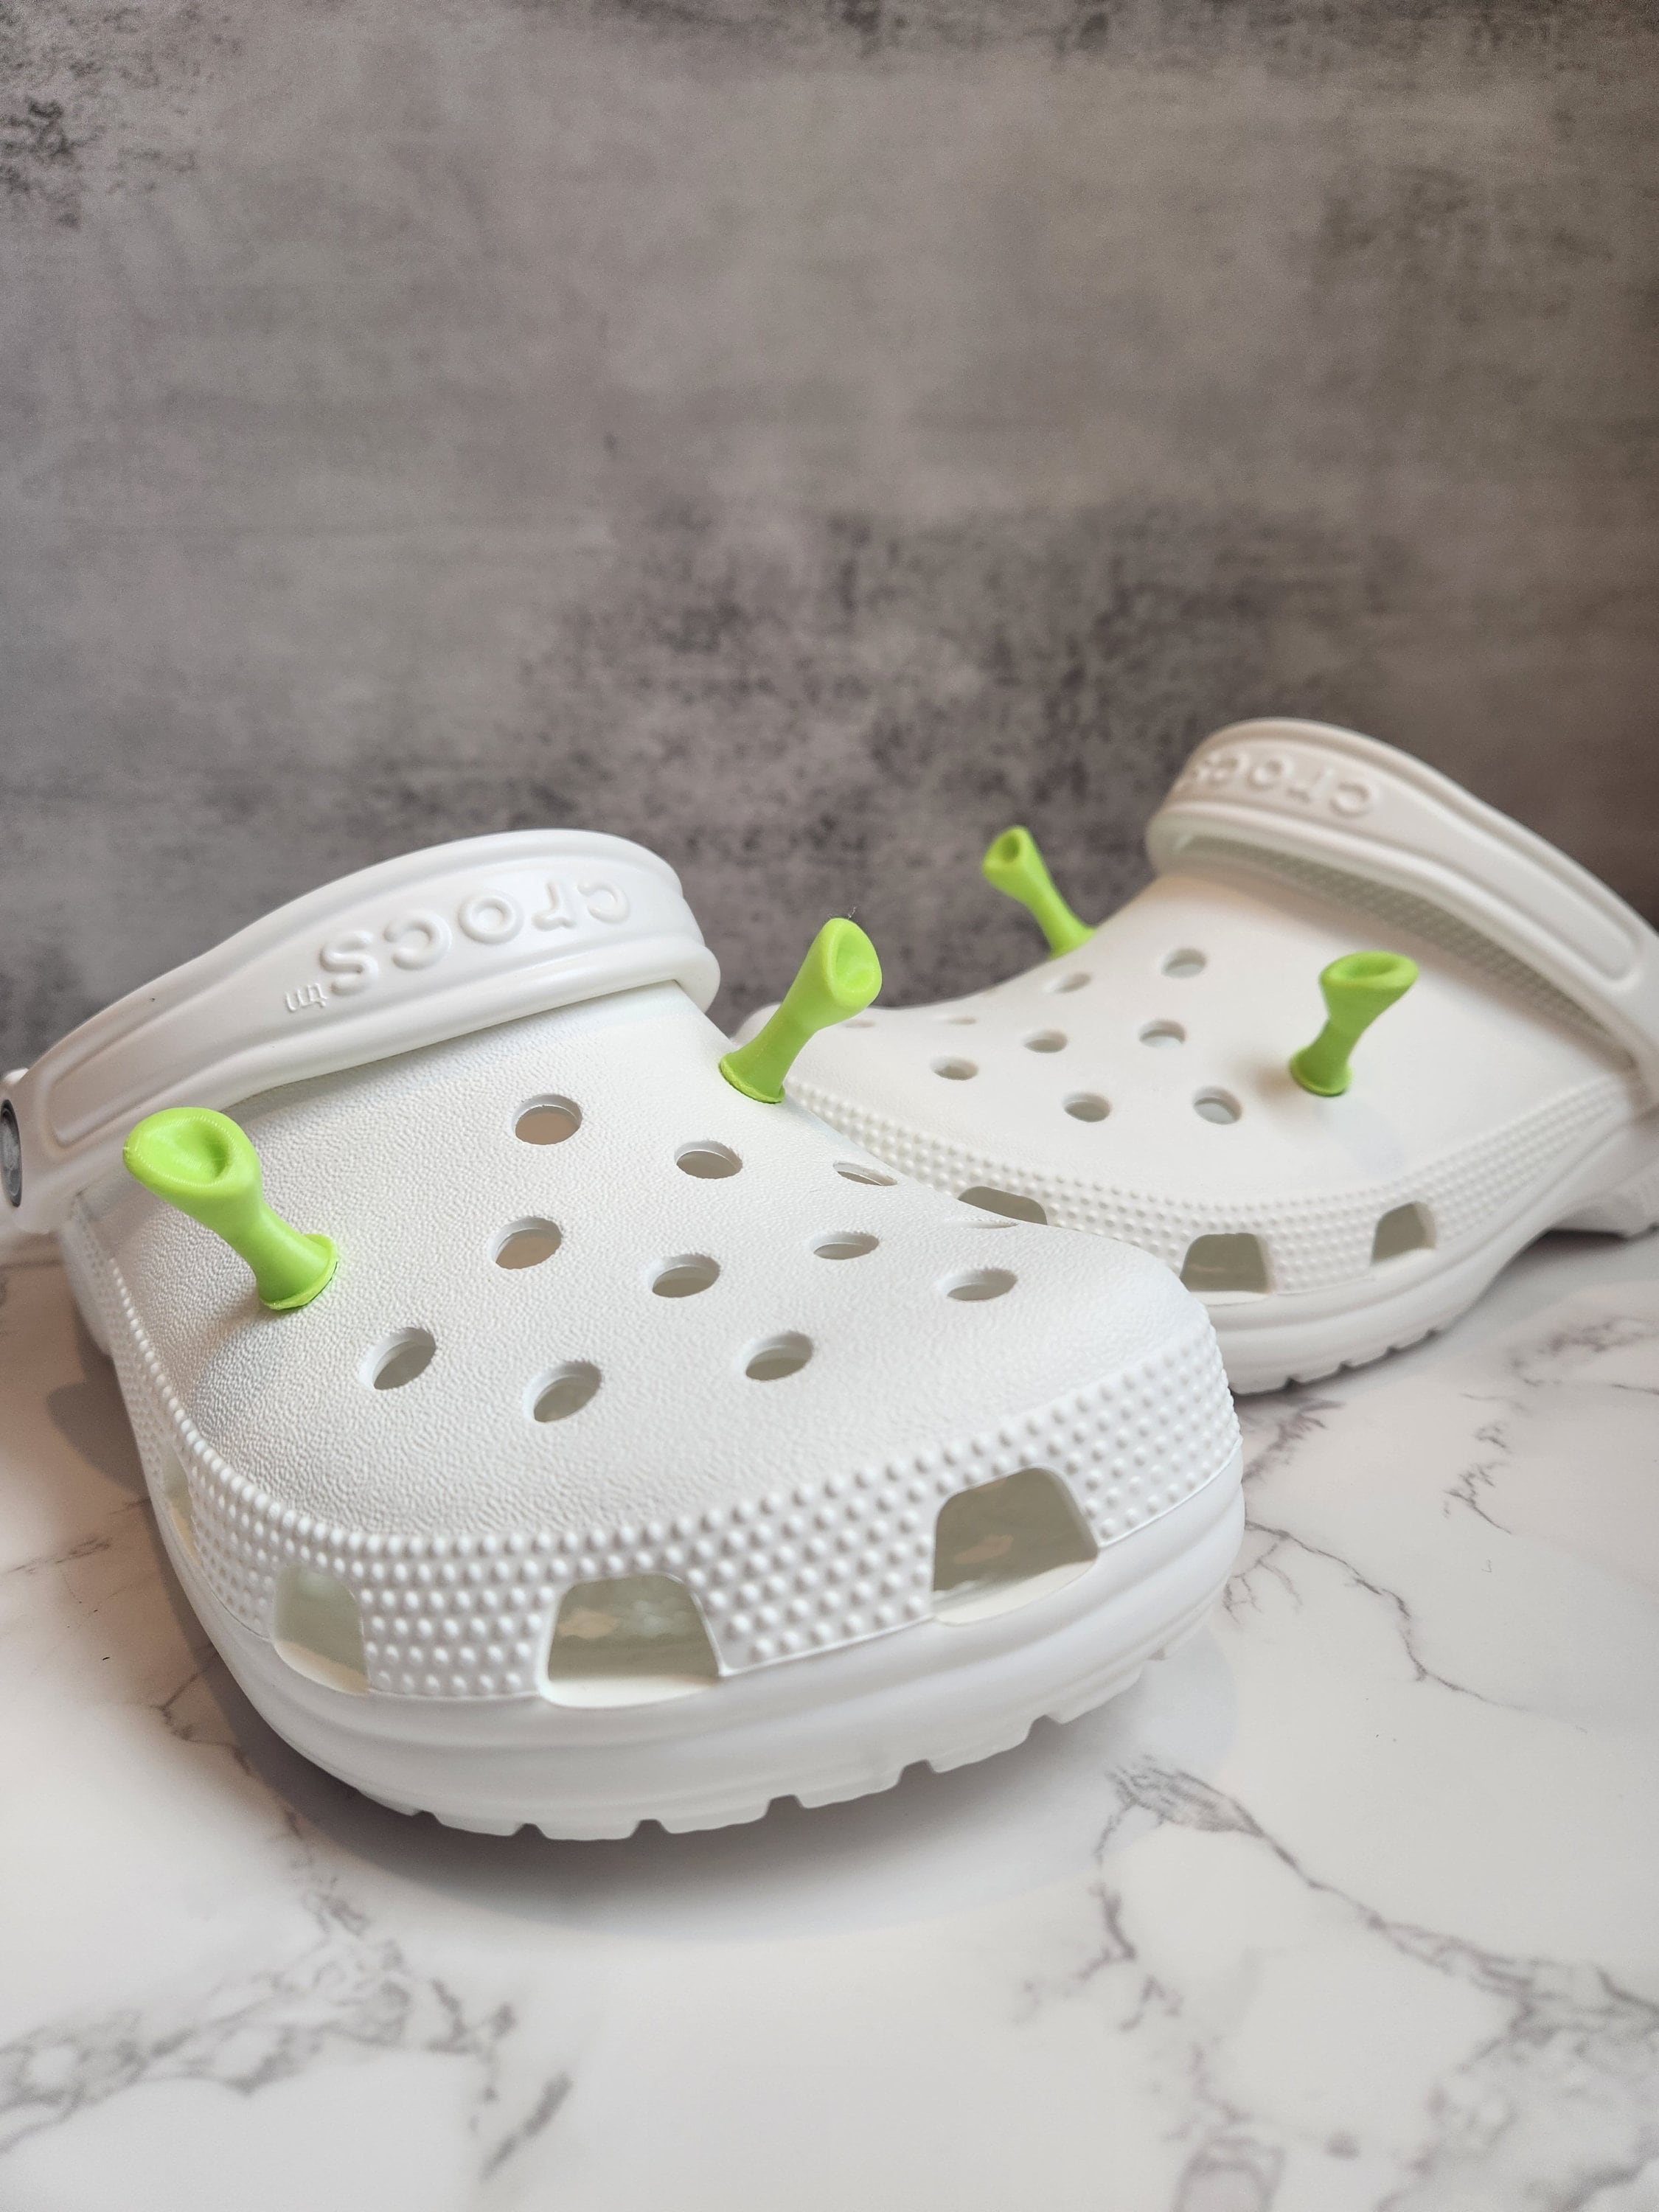  Shrek Donkey Shoe Charm compatible with Crocs Clogs